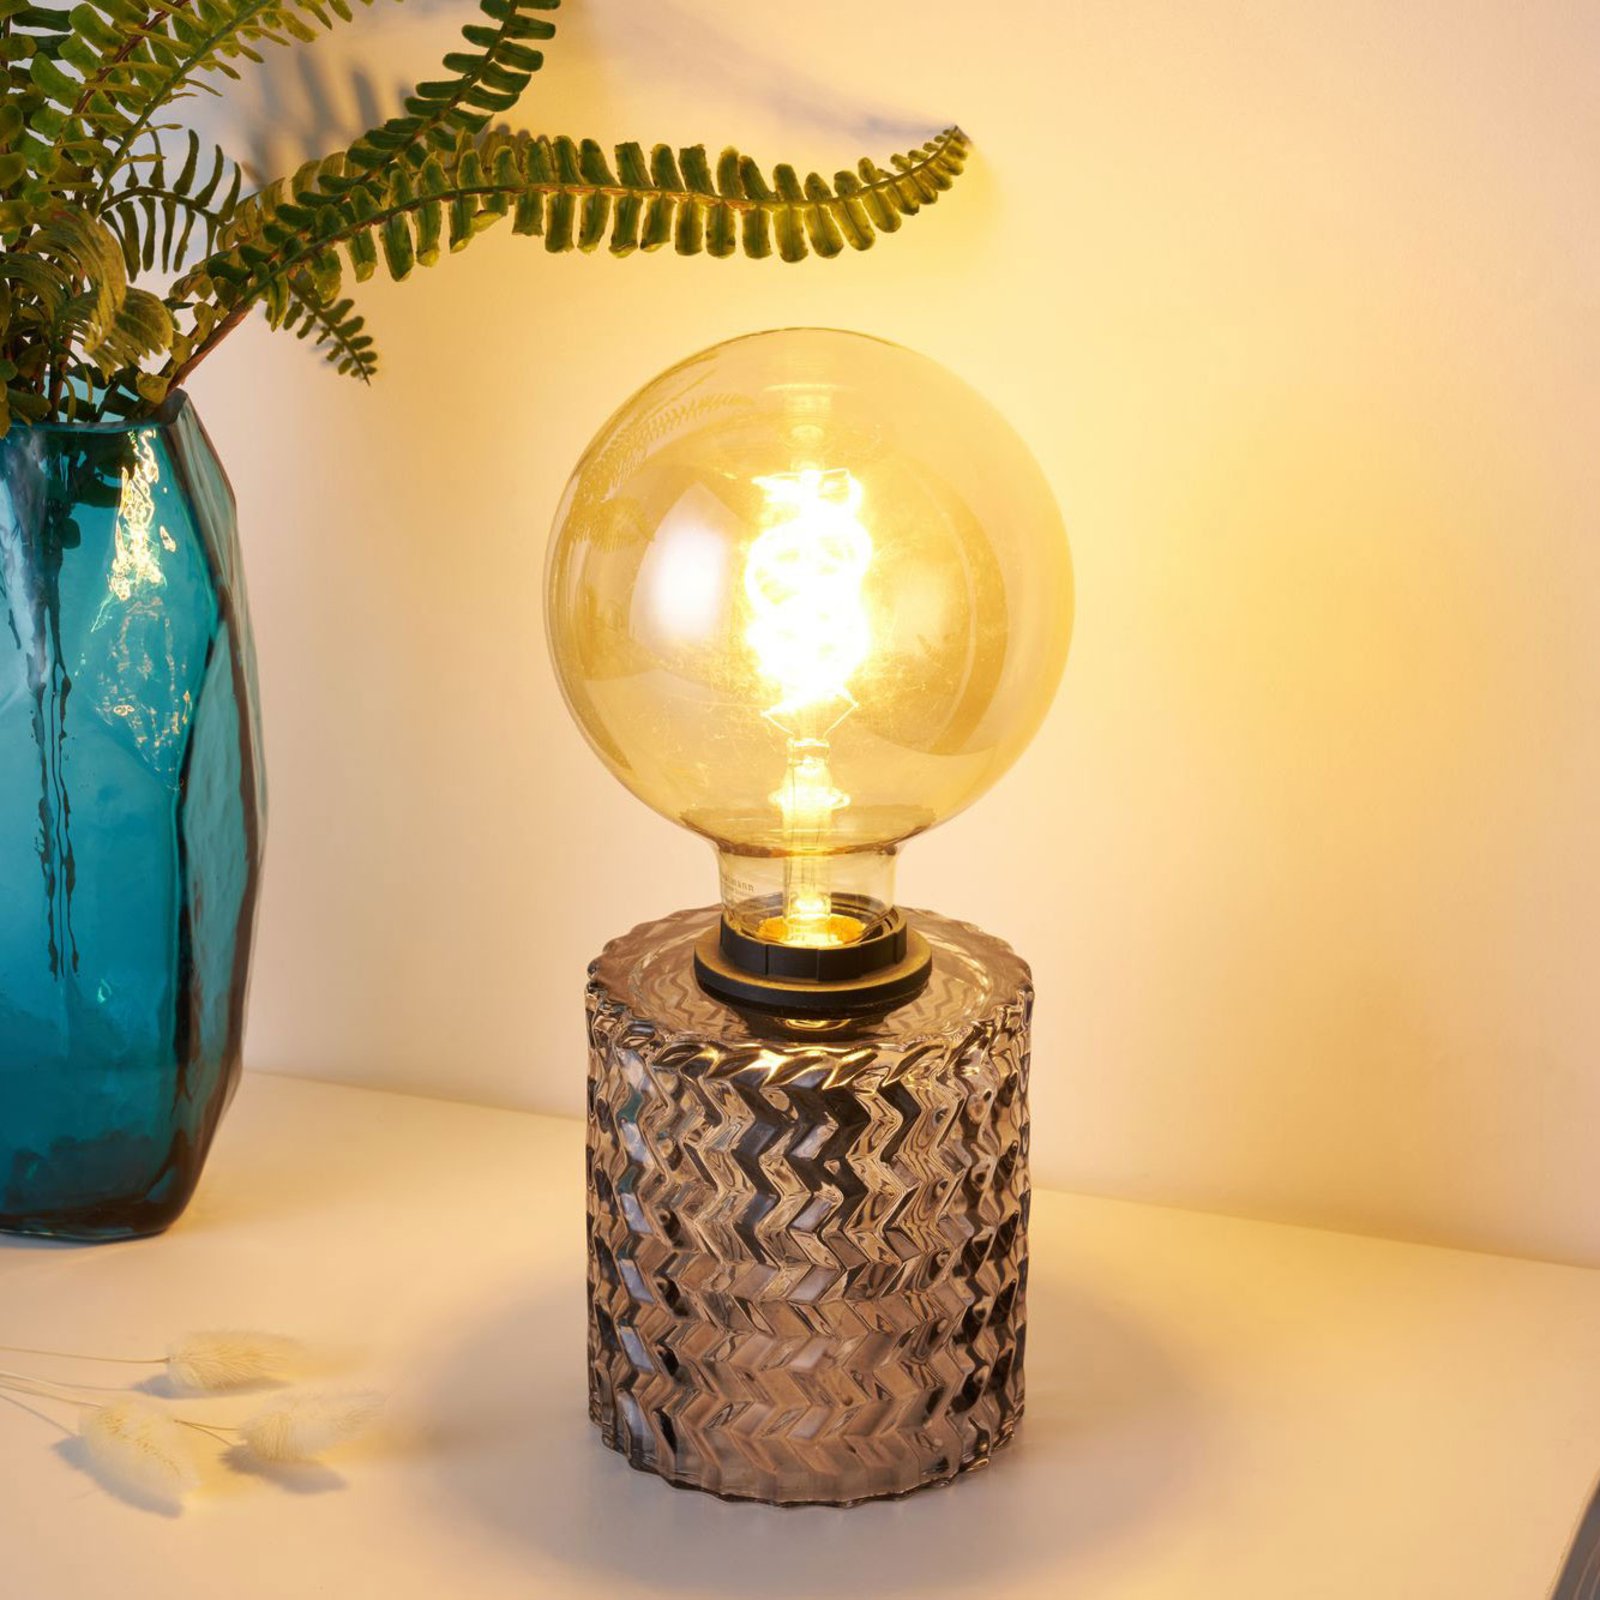 Pauleen Crystal Smoke lampe à poser socle de verre